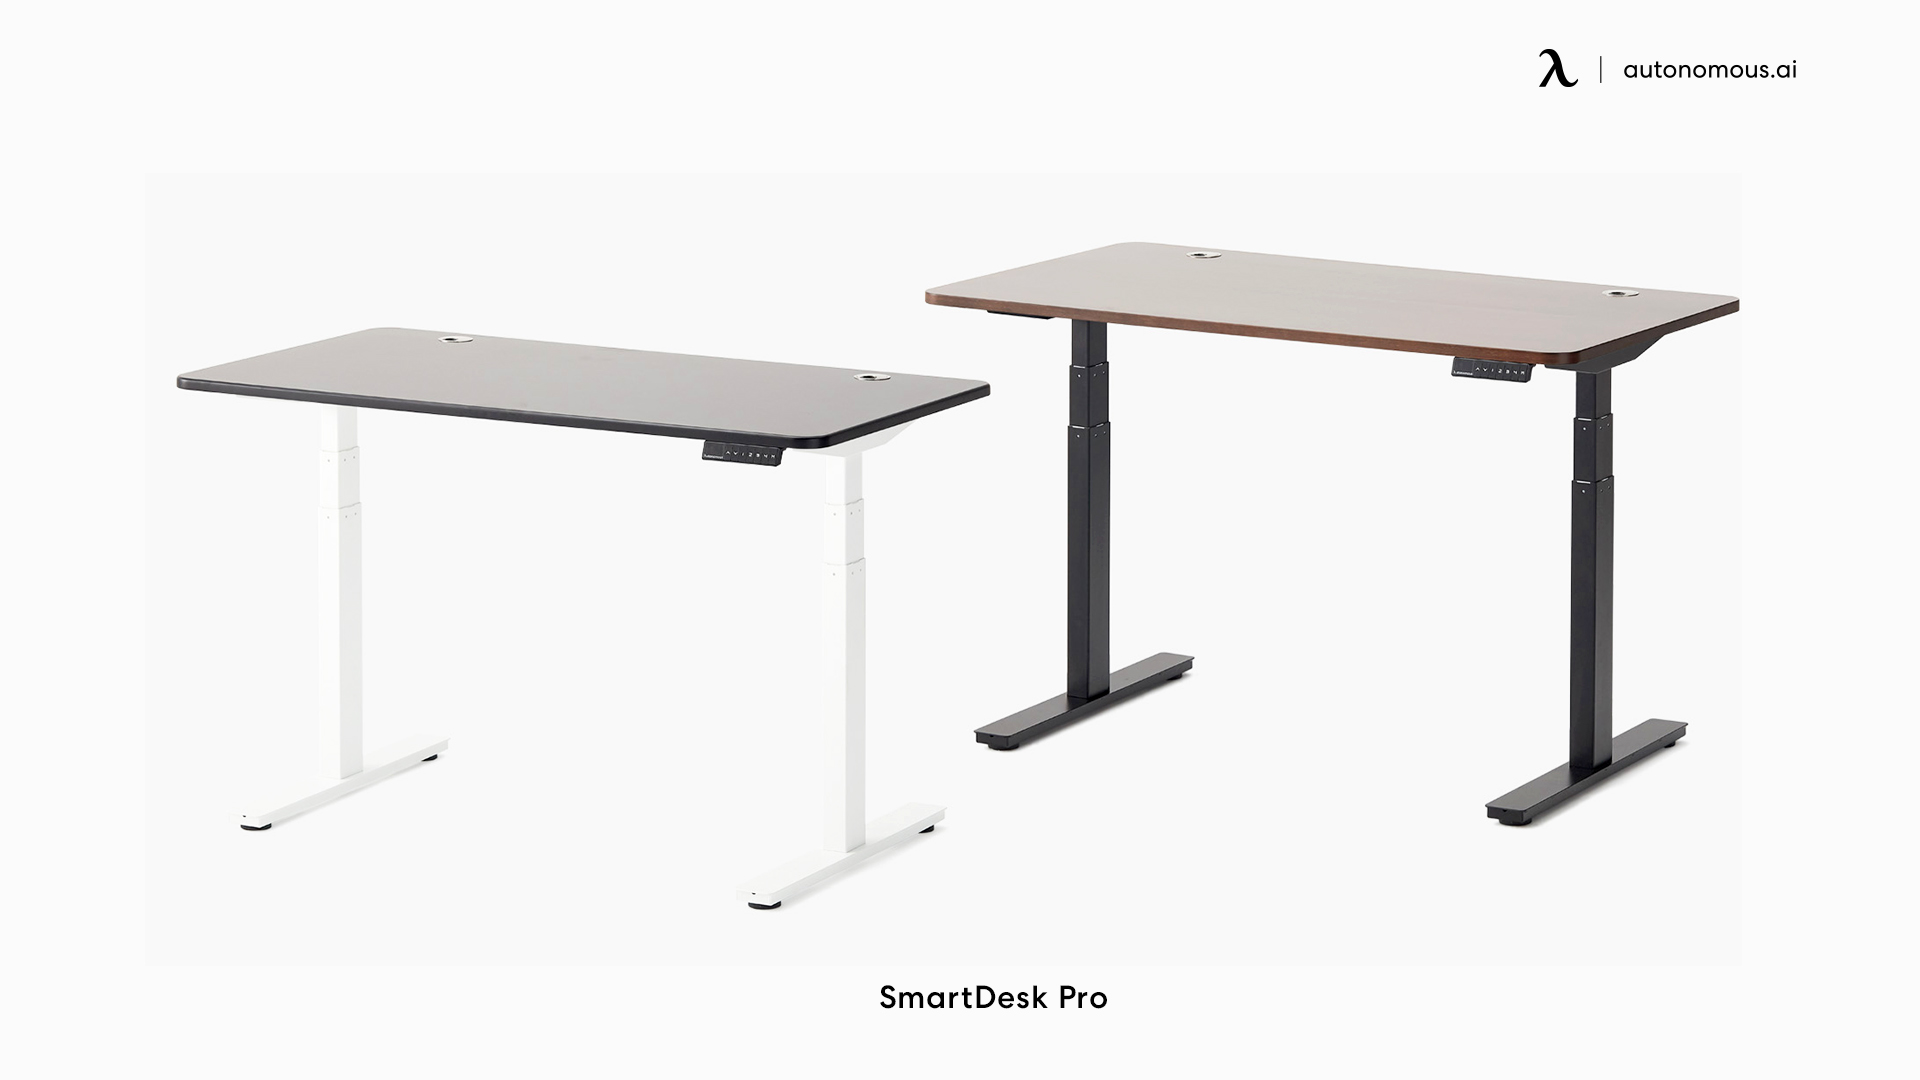 SmartDesk Pro 72-inch standing desk